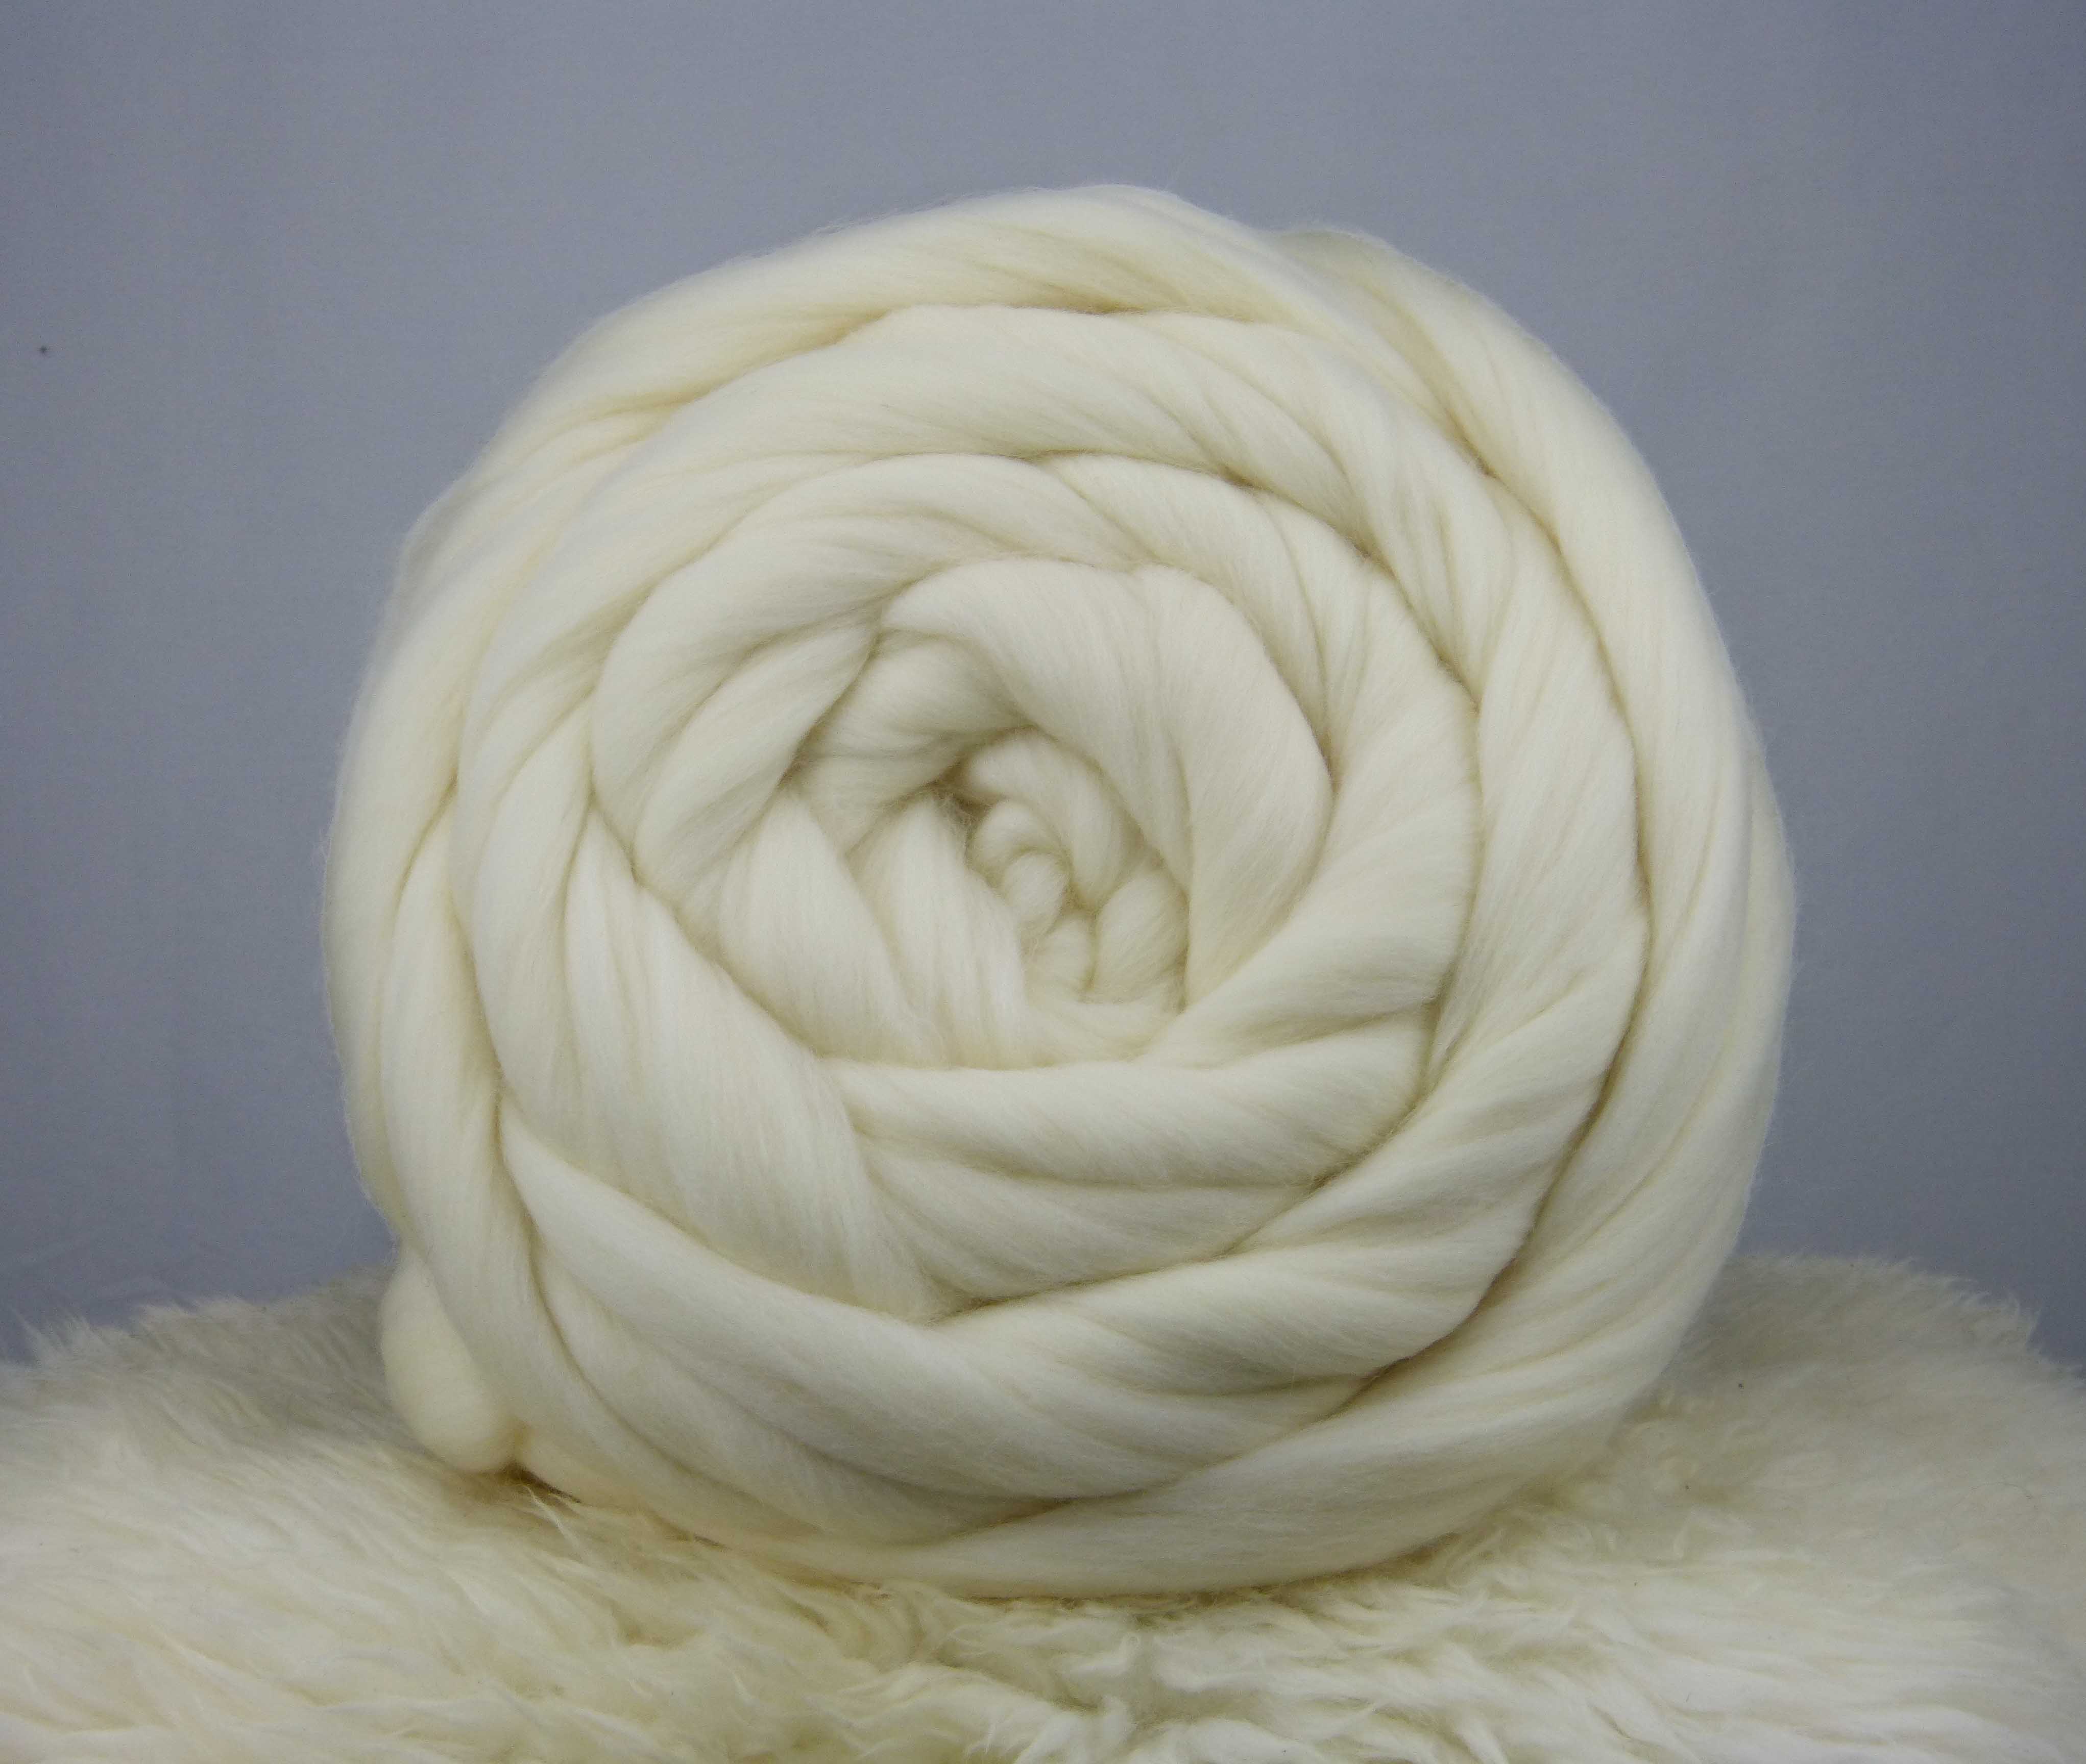 grosse laine 2 kg - Achat en ligne